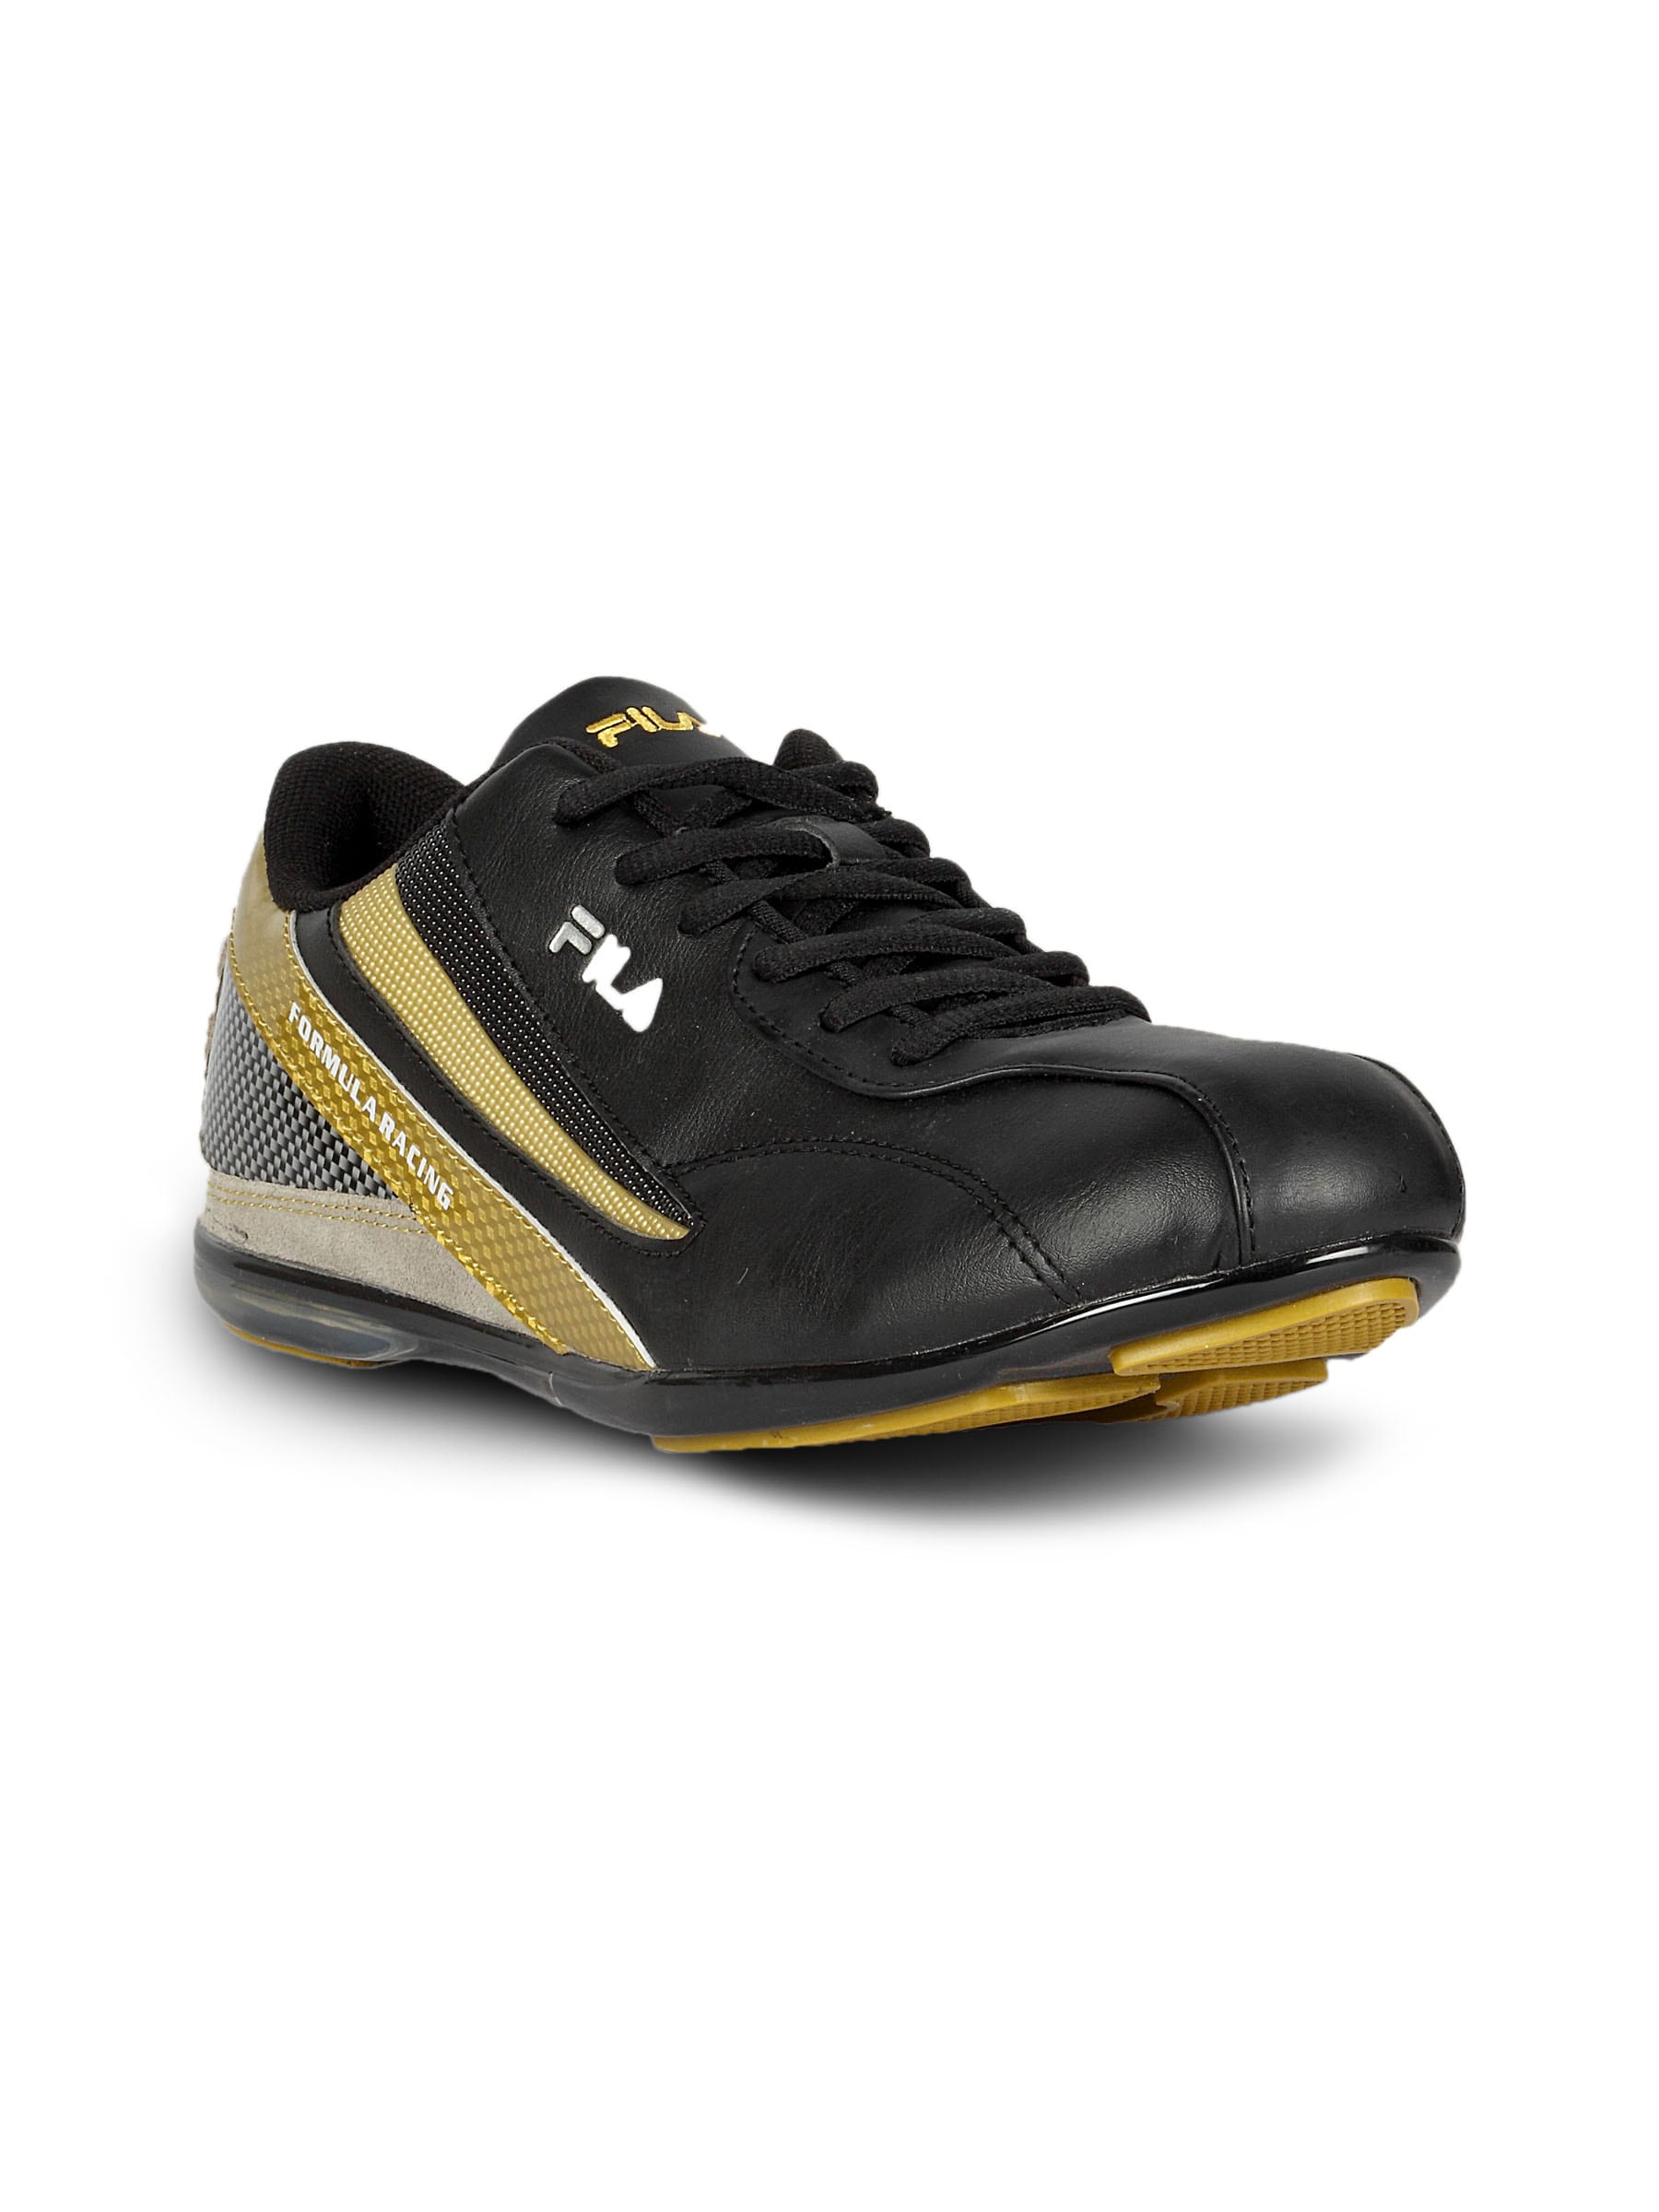 Fila Men's Racing Black Gold Shoe